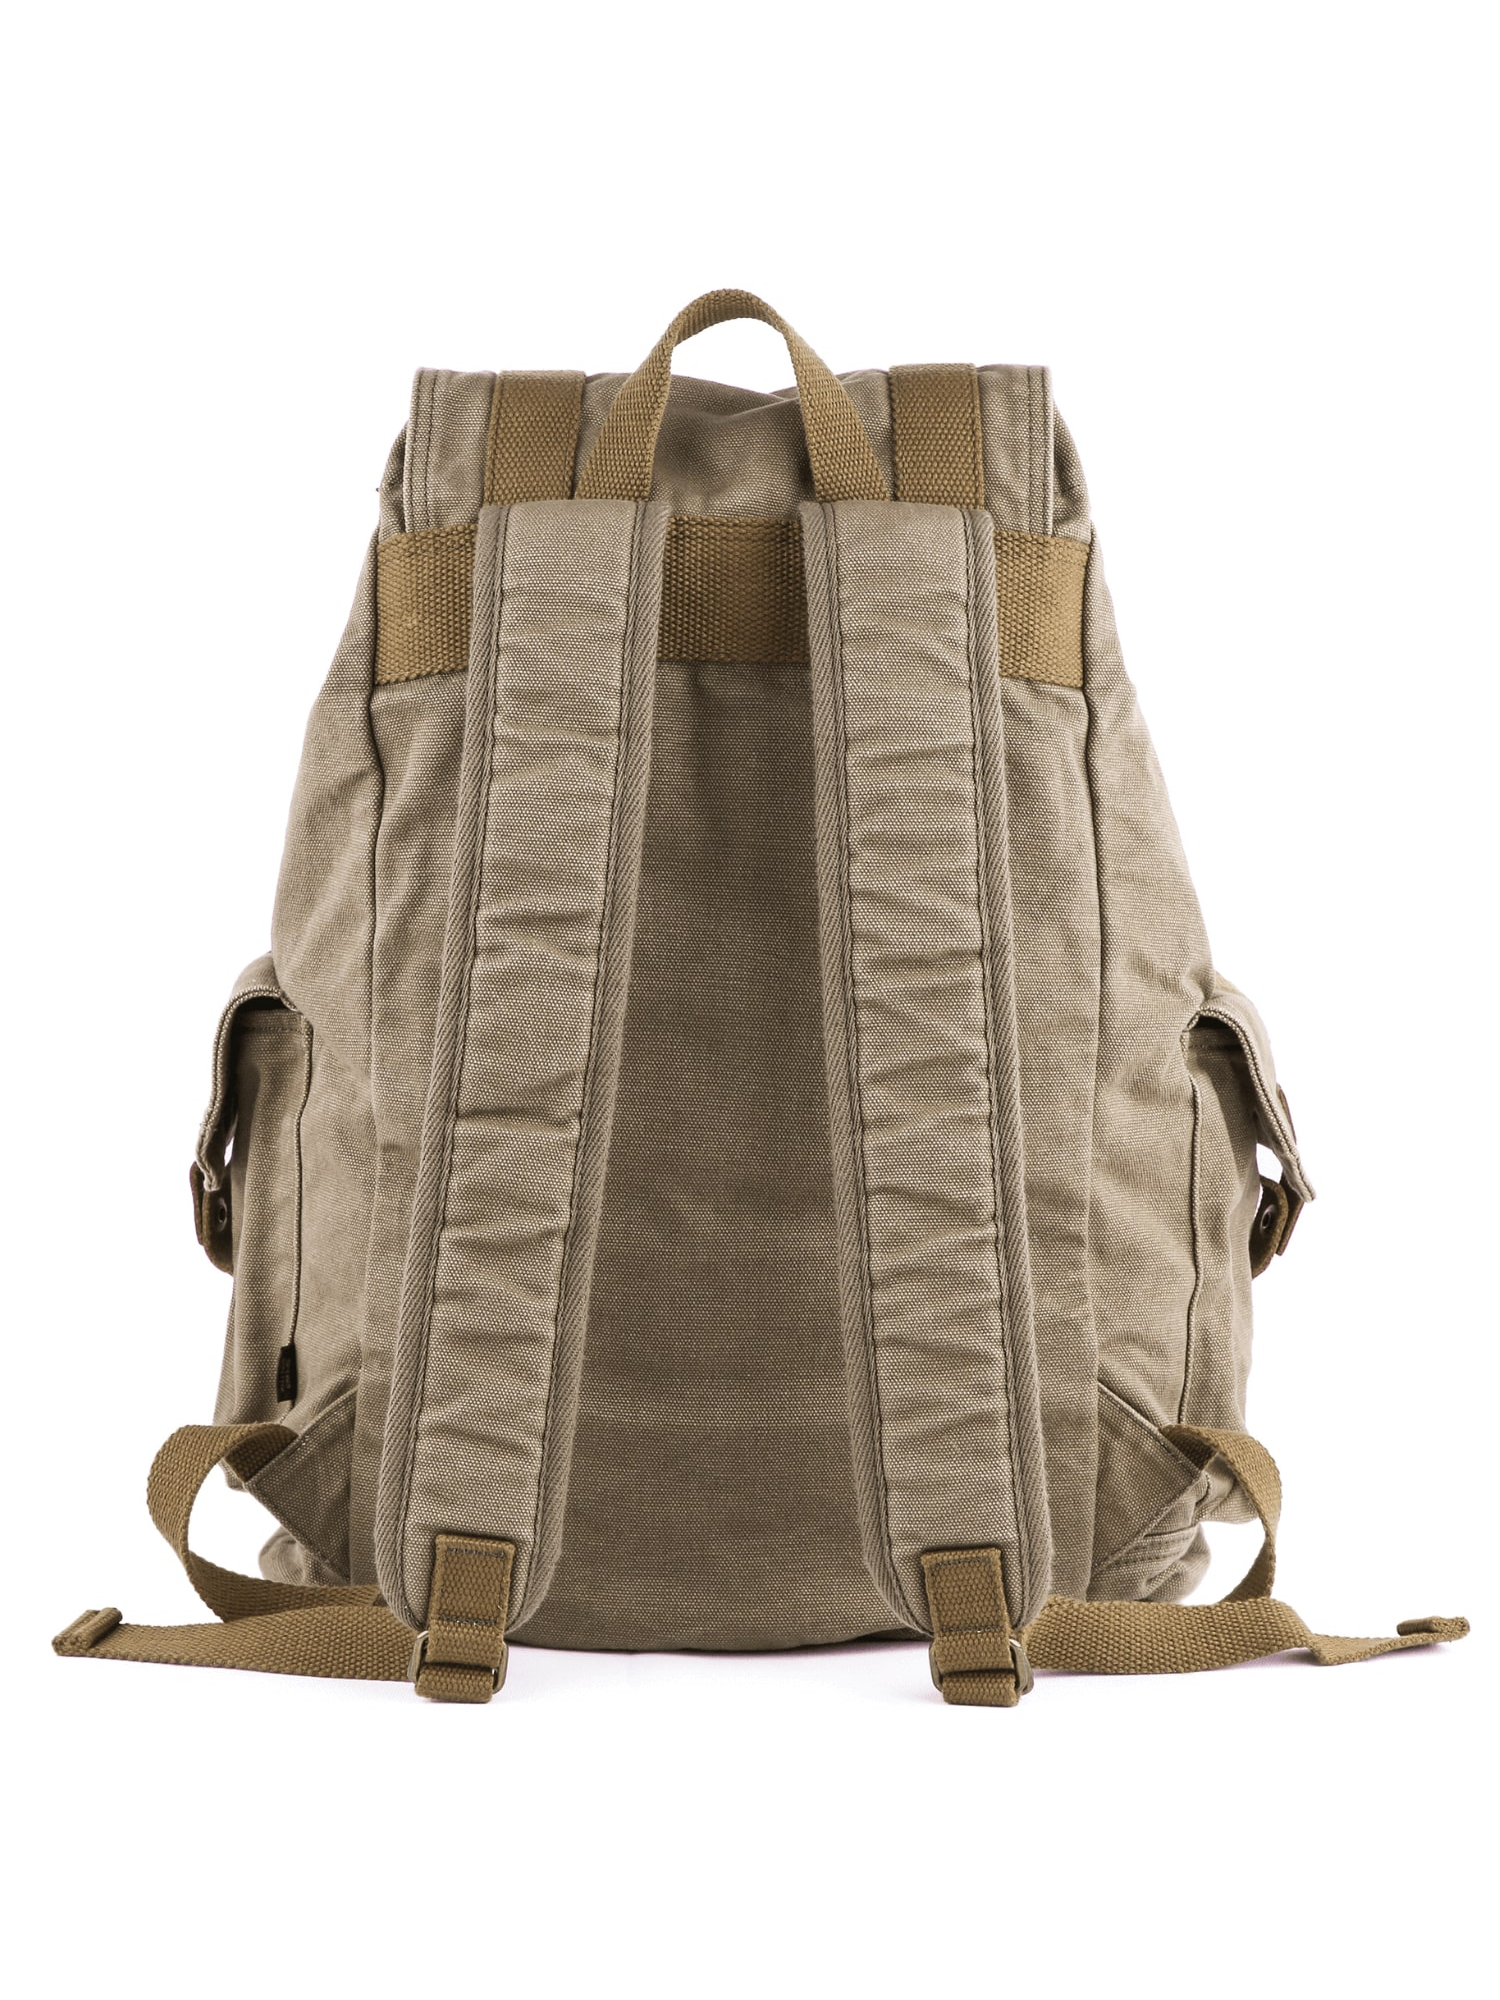 Рюкзак Gootium Canvas 21101, армейский зеленый new slr camera backpack bag waterproof canvas